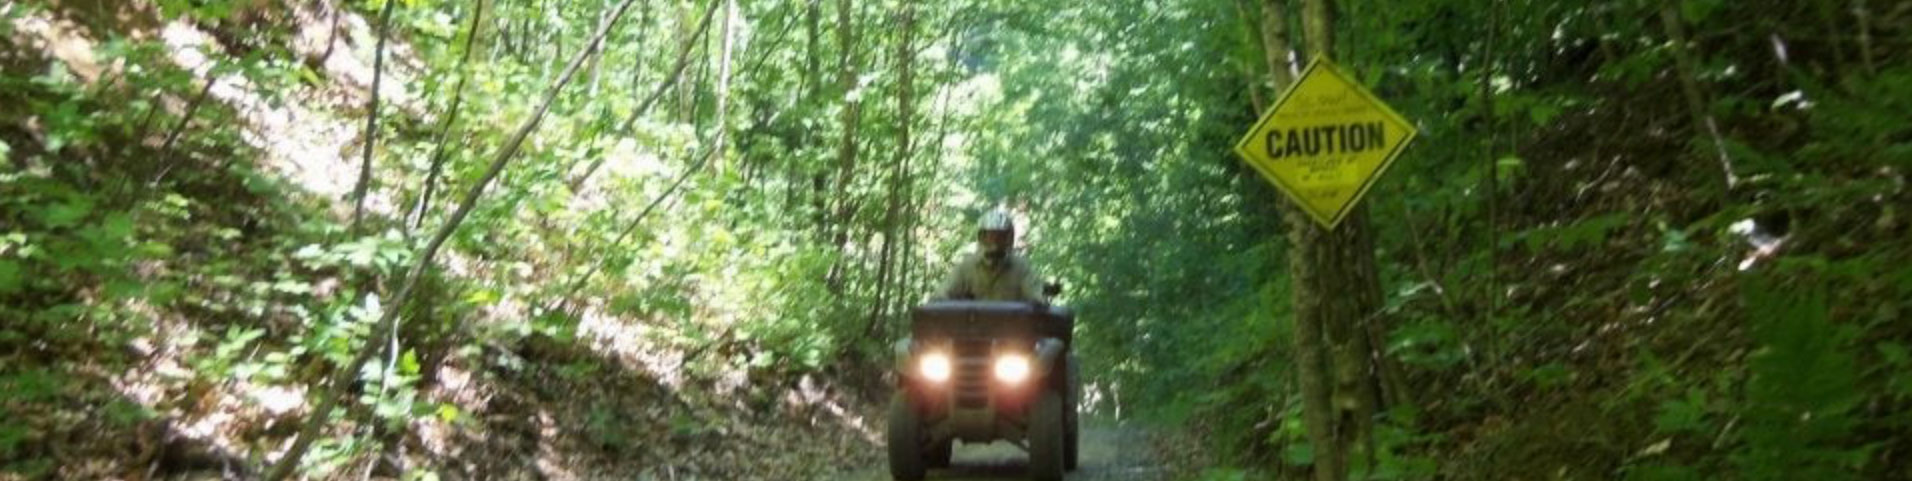 ATV in the woods